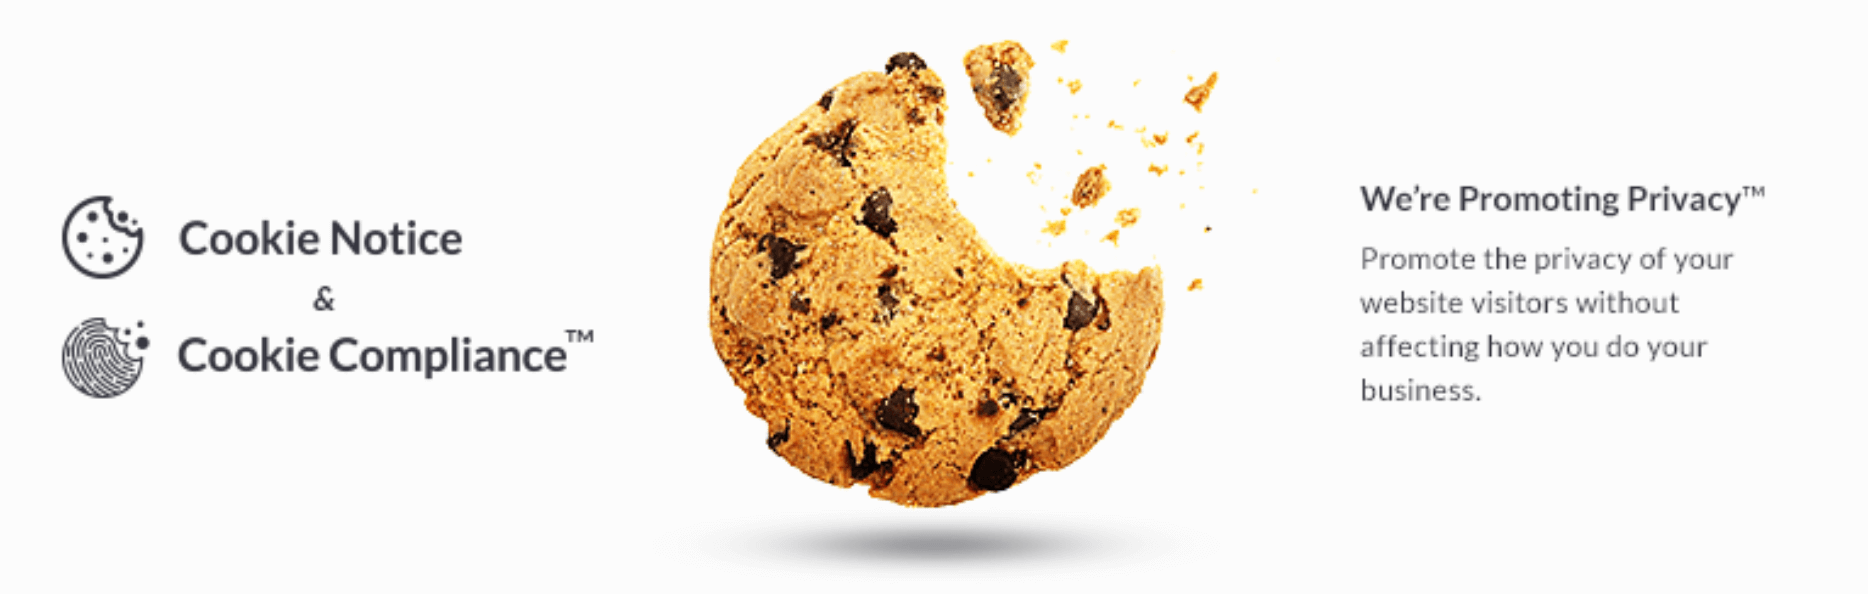 cookie notice - thumbnail